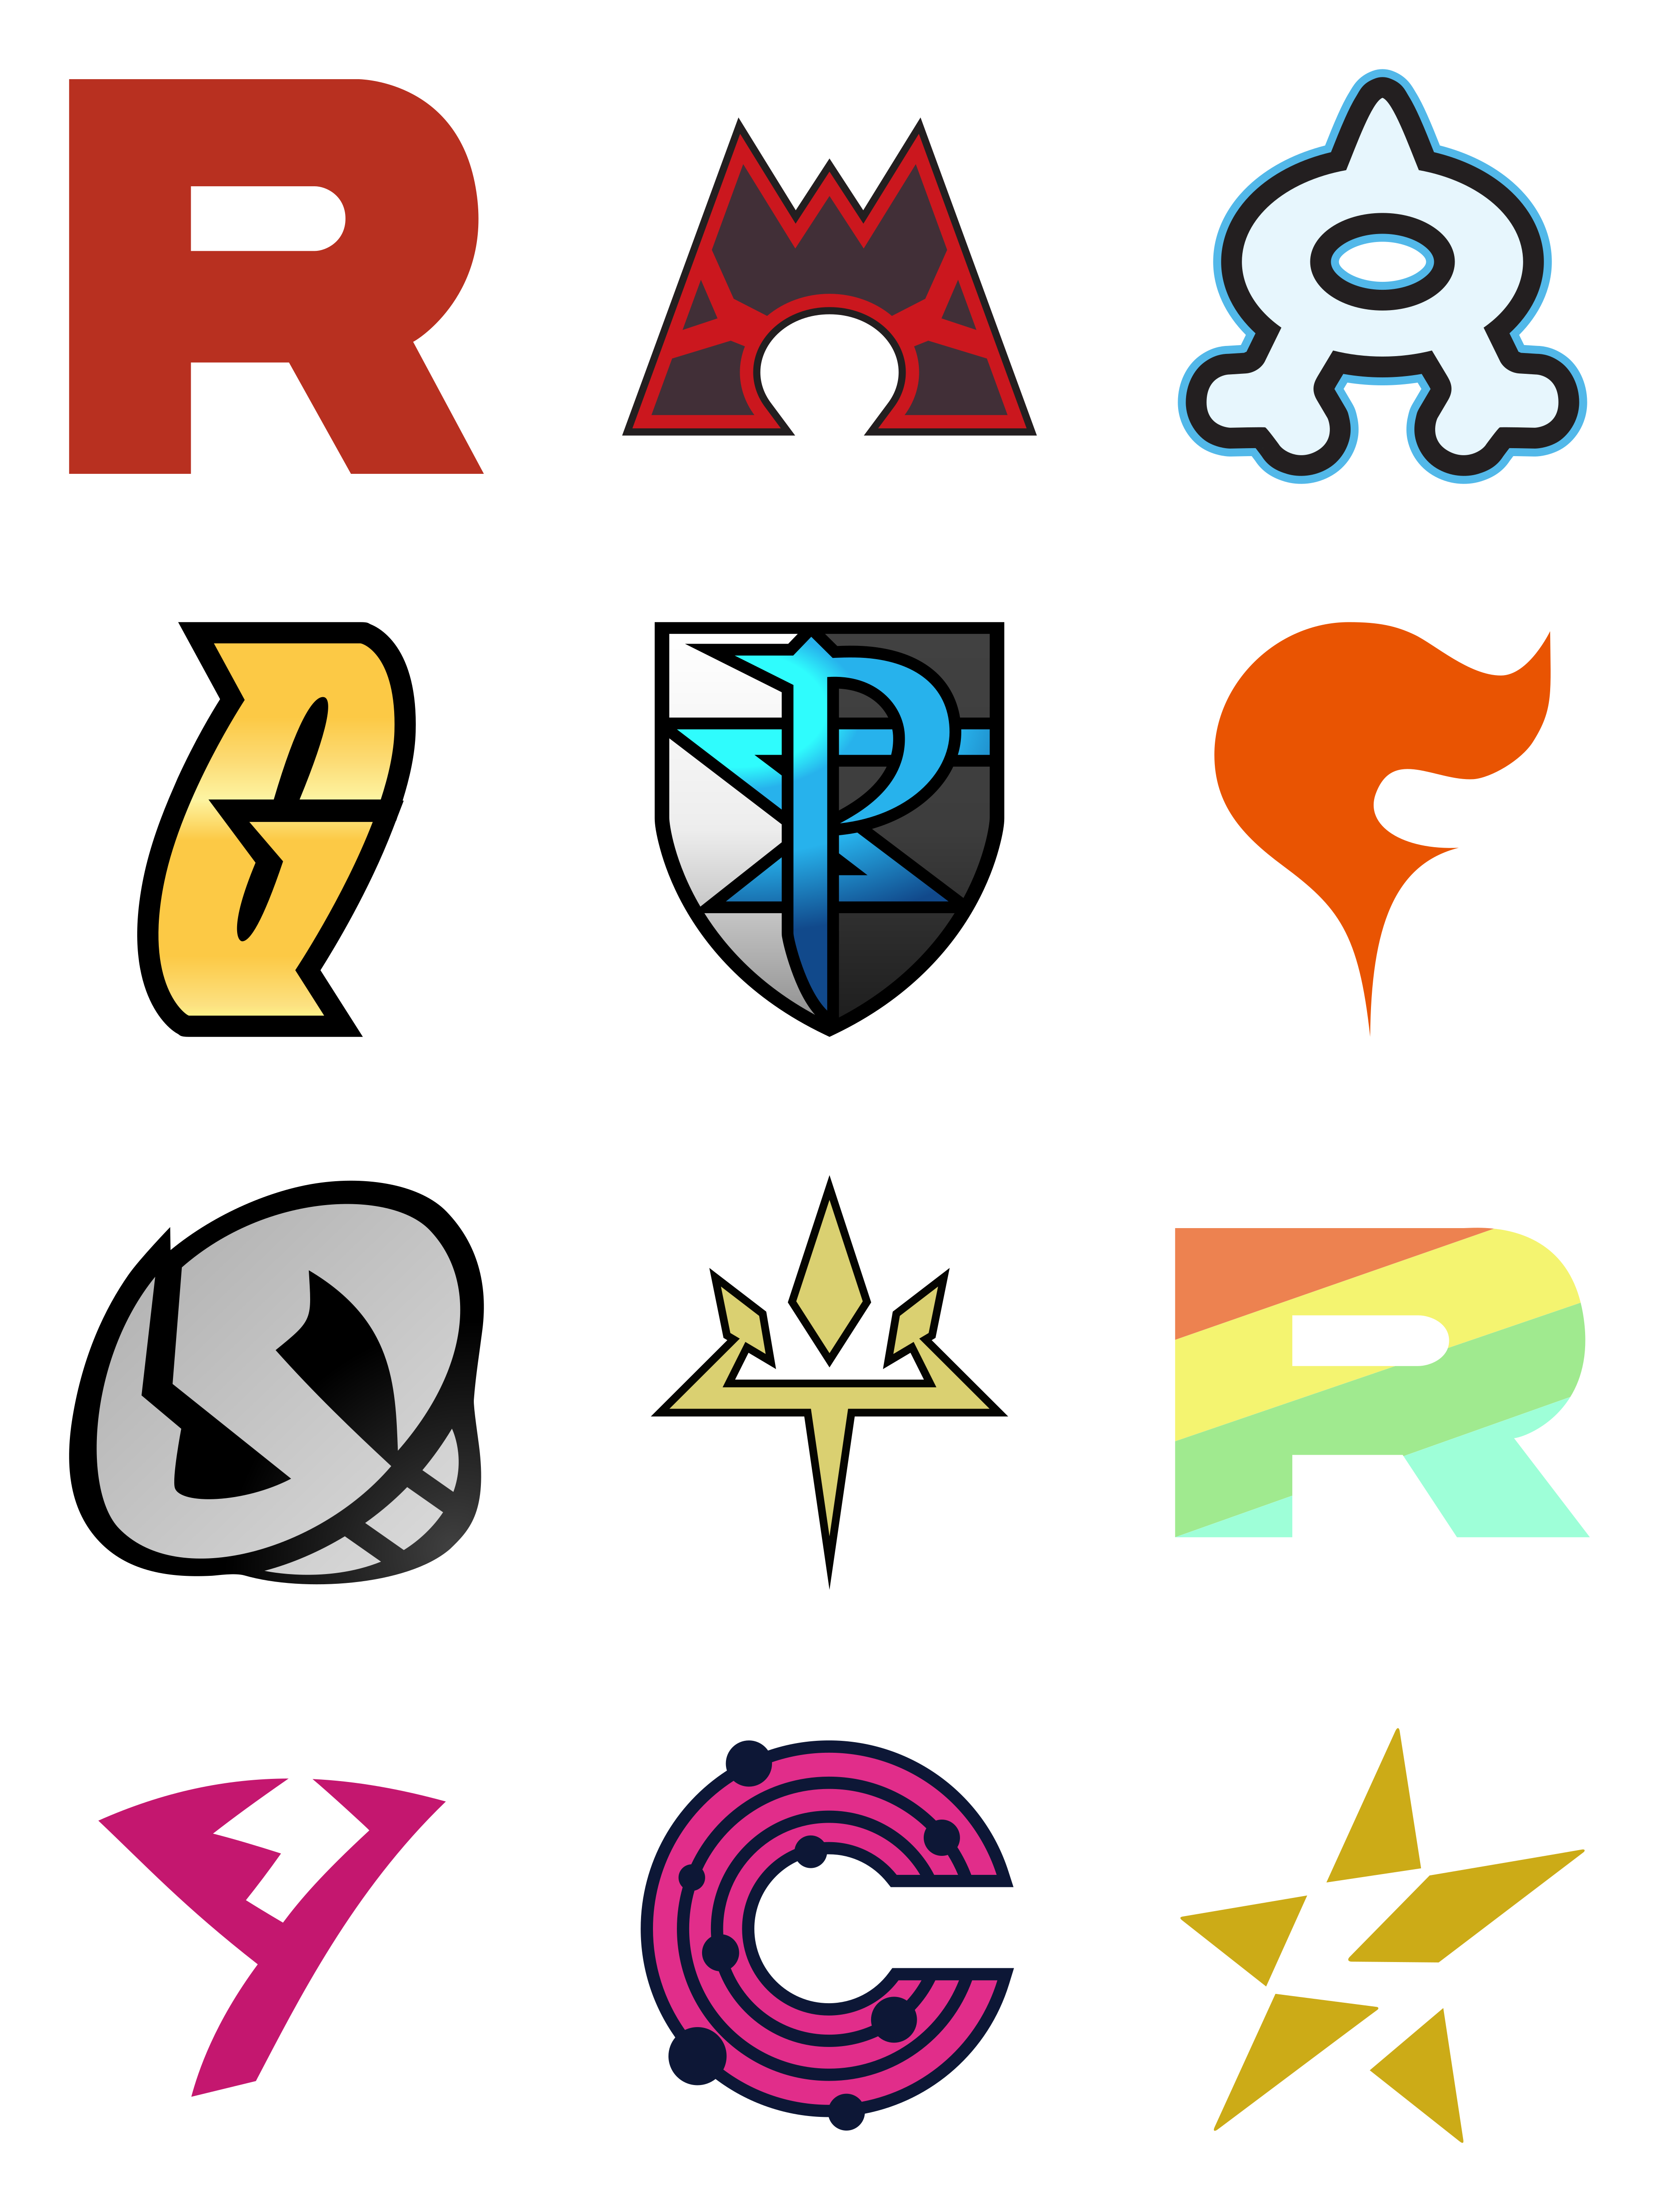 Pokemon Type Symbols by ILKCMP on DeviantArt